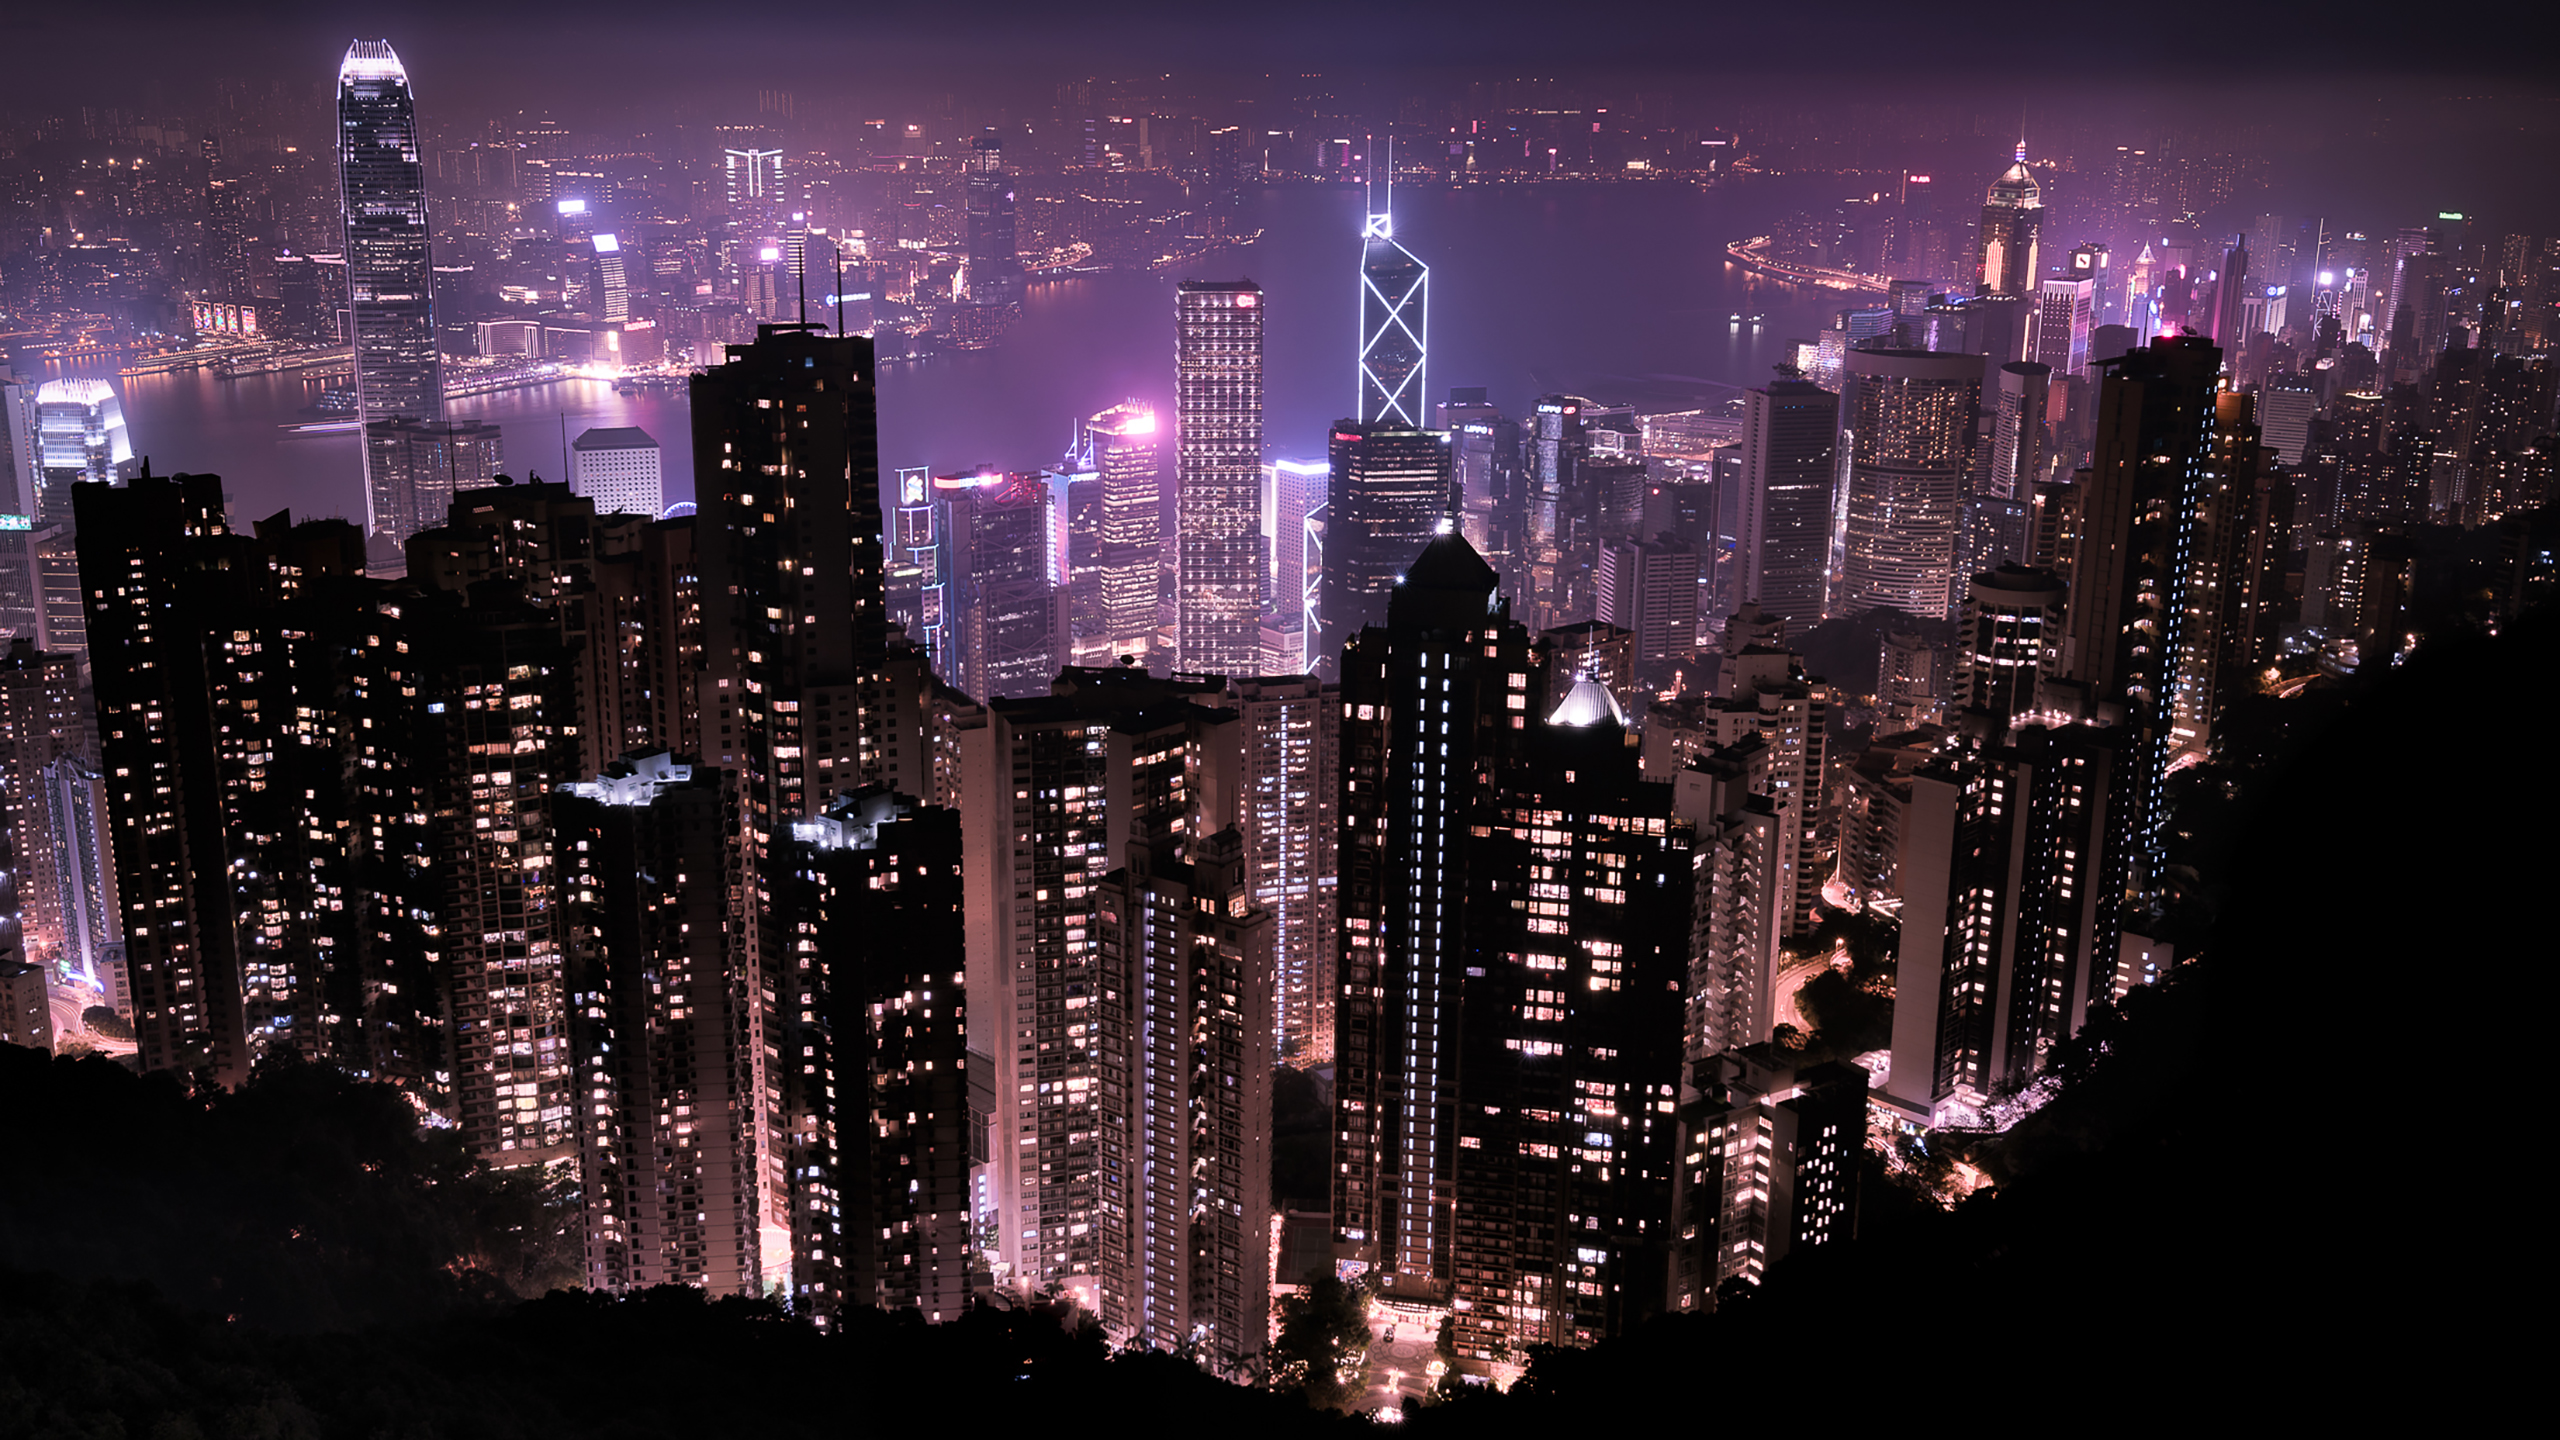 Hong Kong Skyline at Sunset